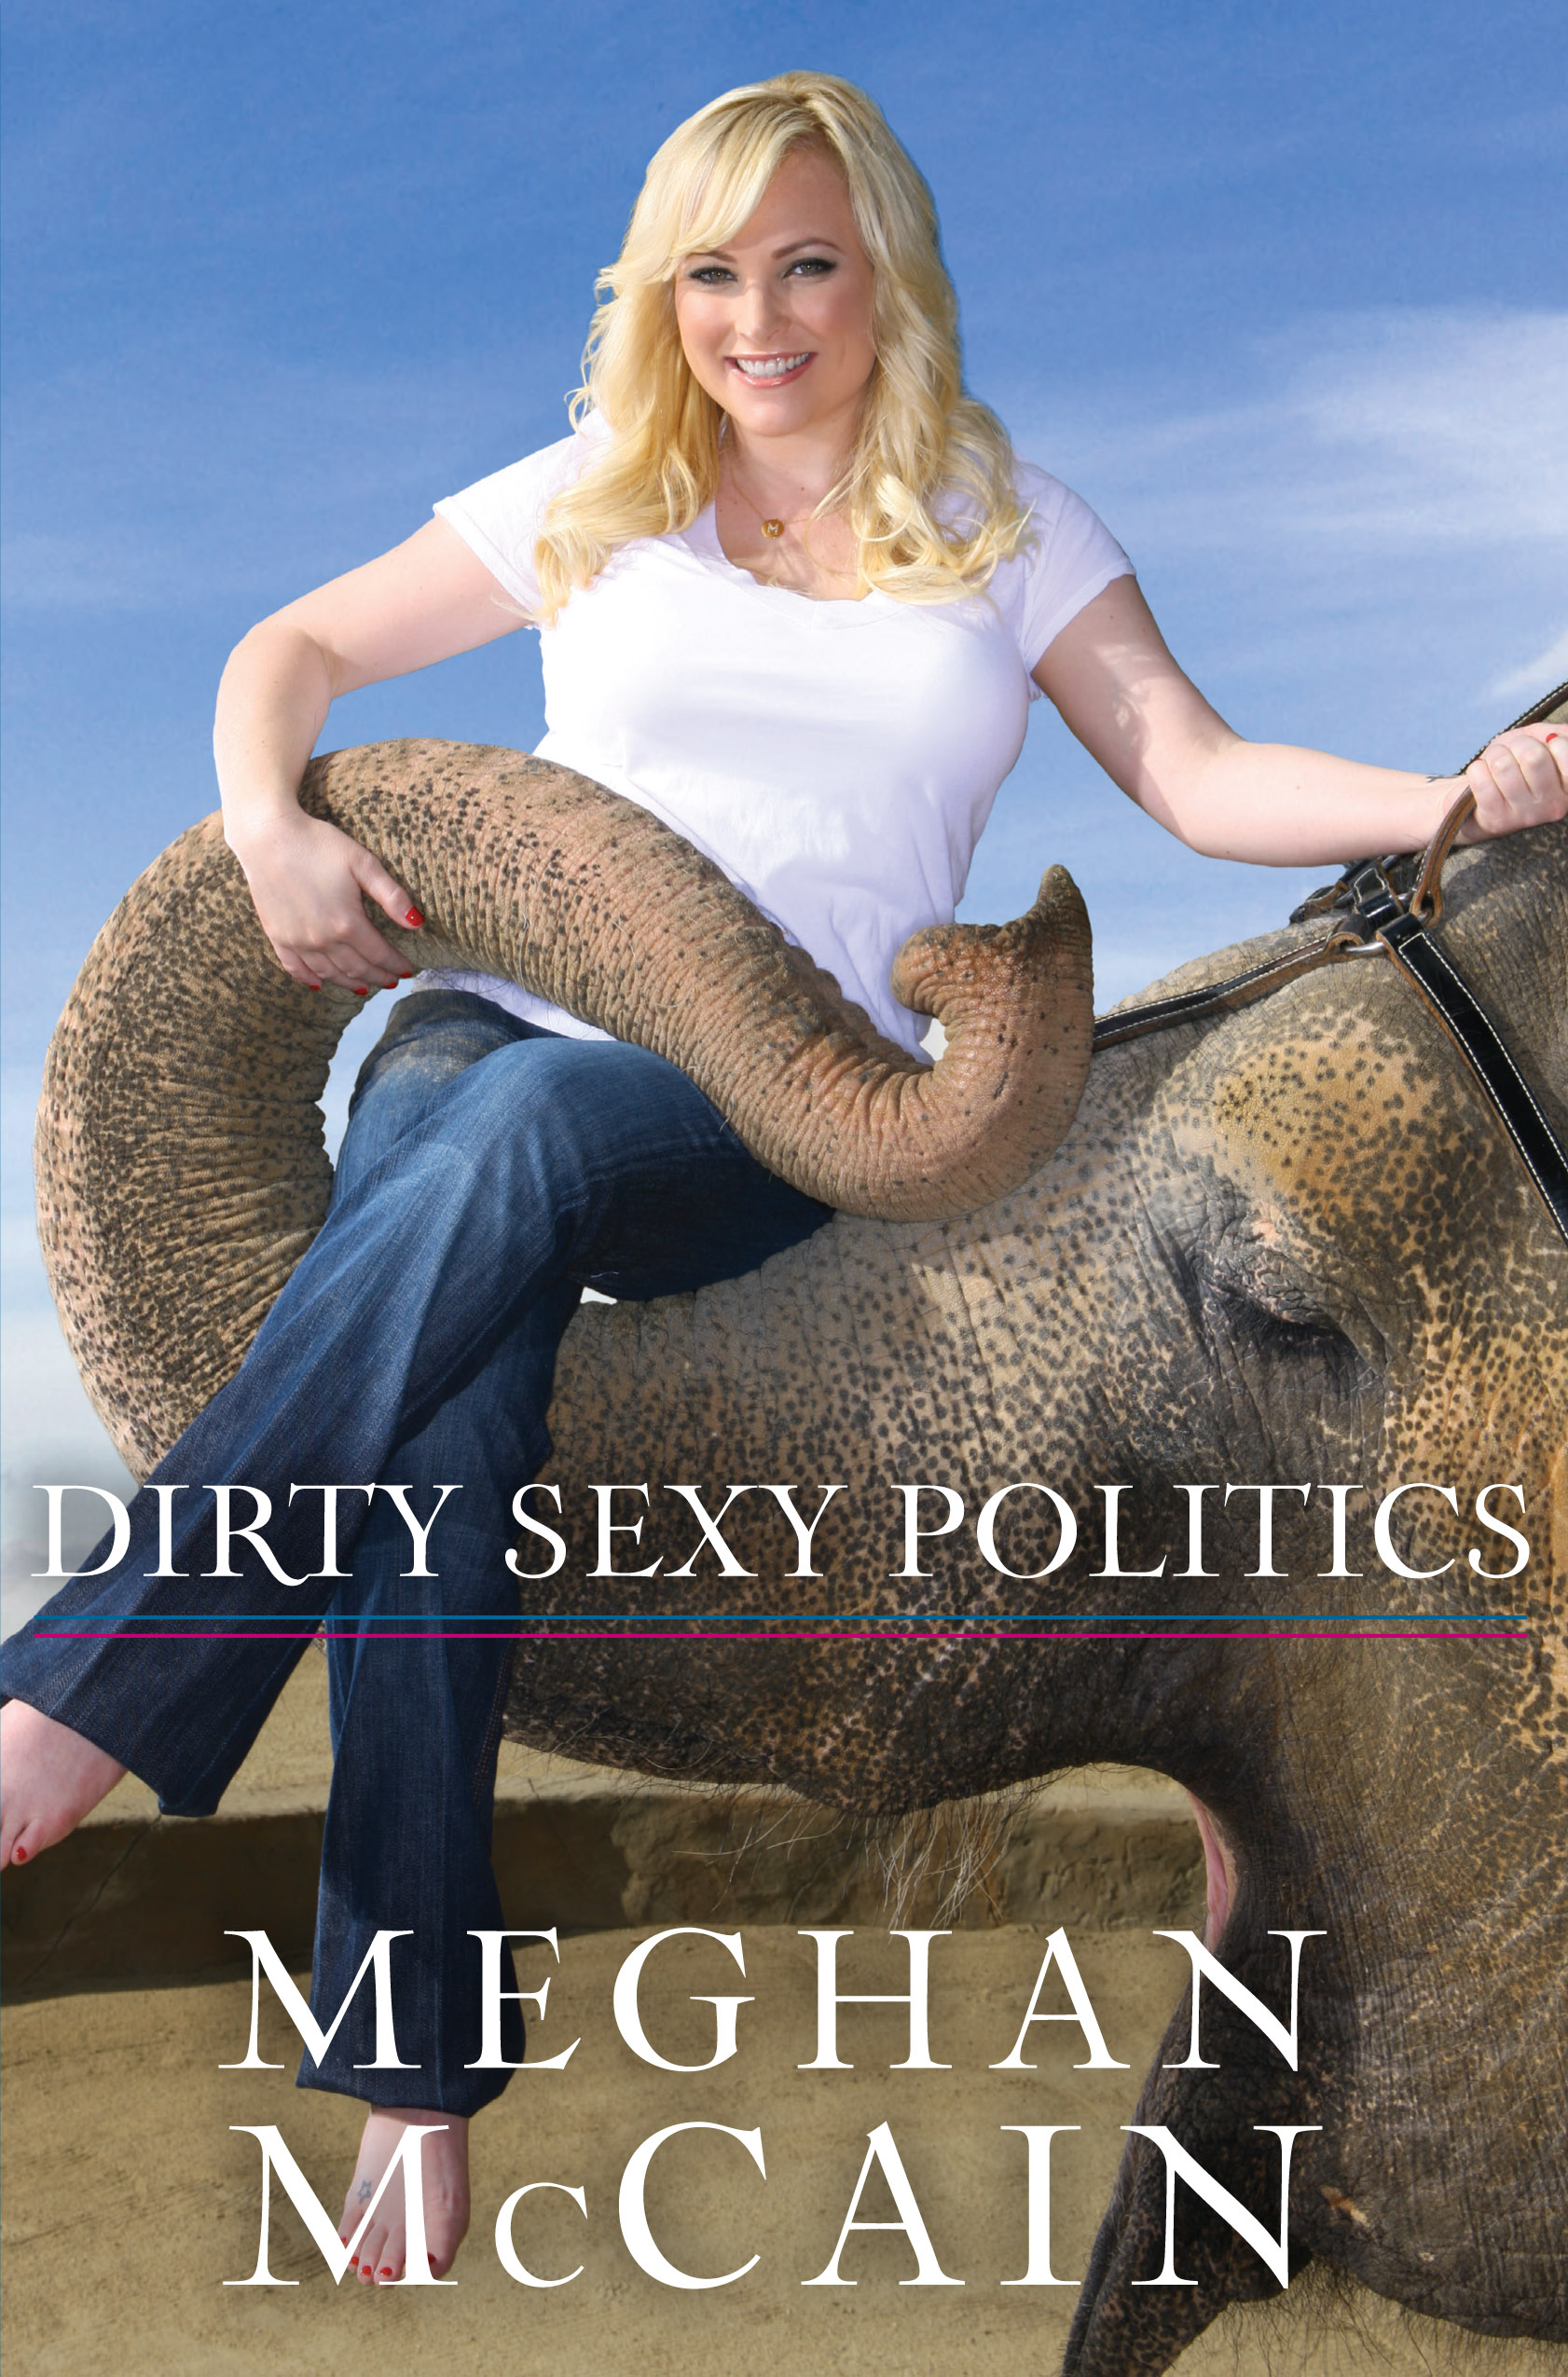 Meghan mccain naked Meghan McCain's